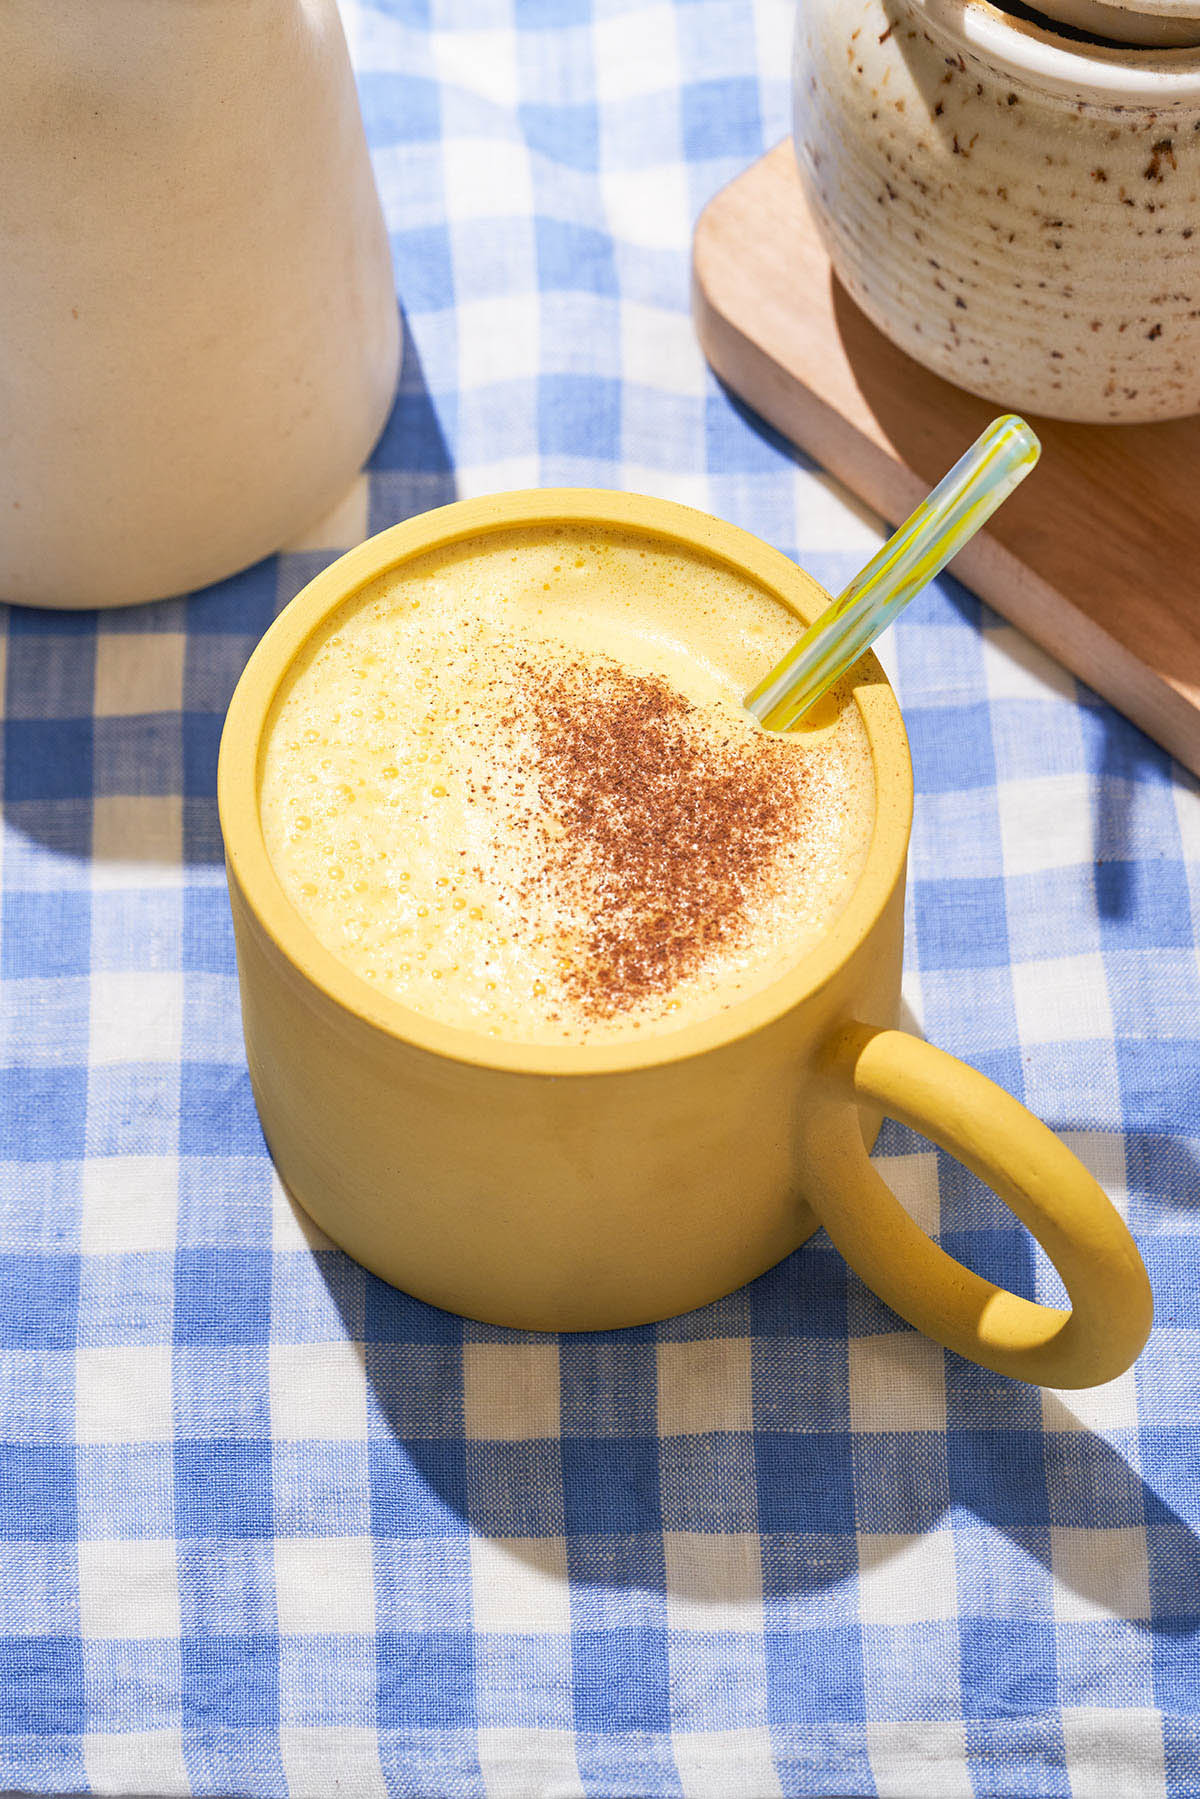 A foamy yellow drink in a yellow mug.